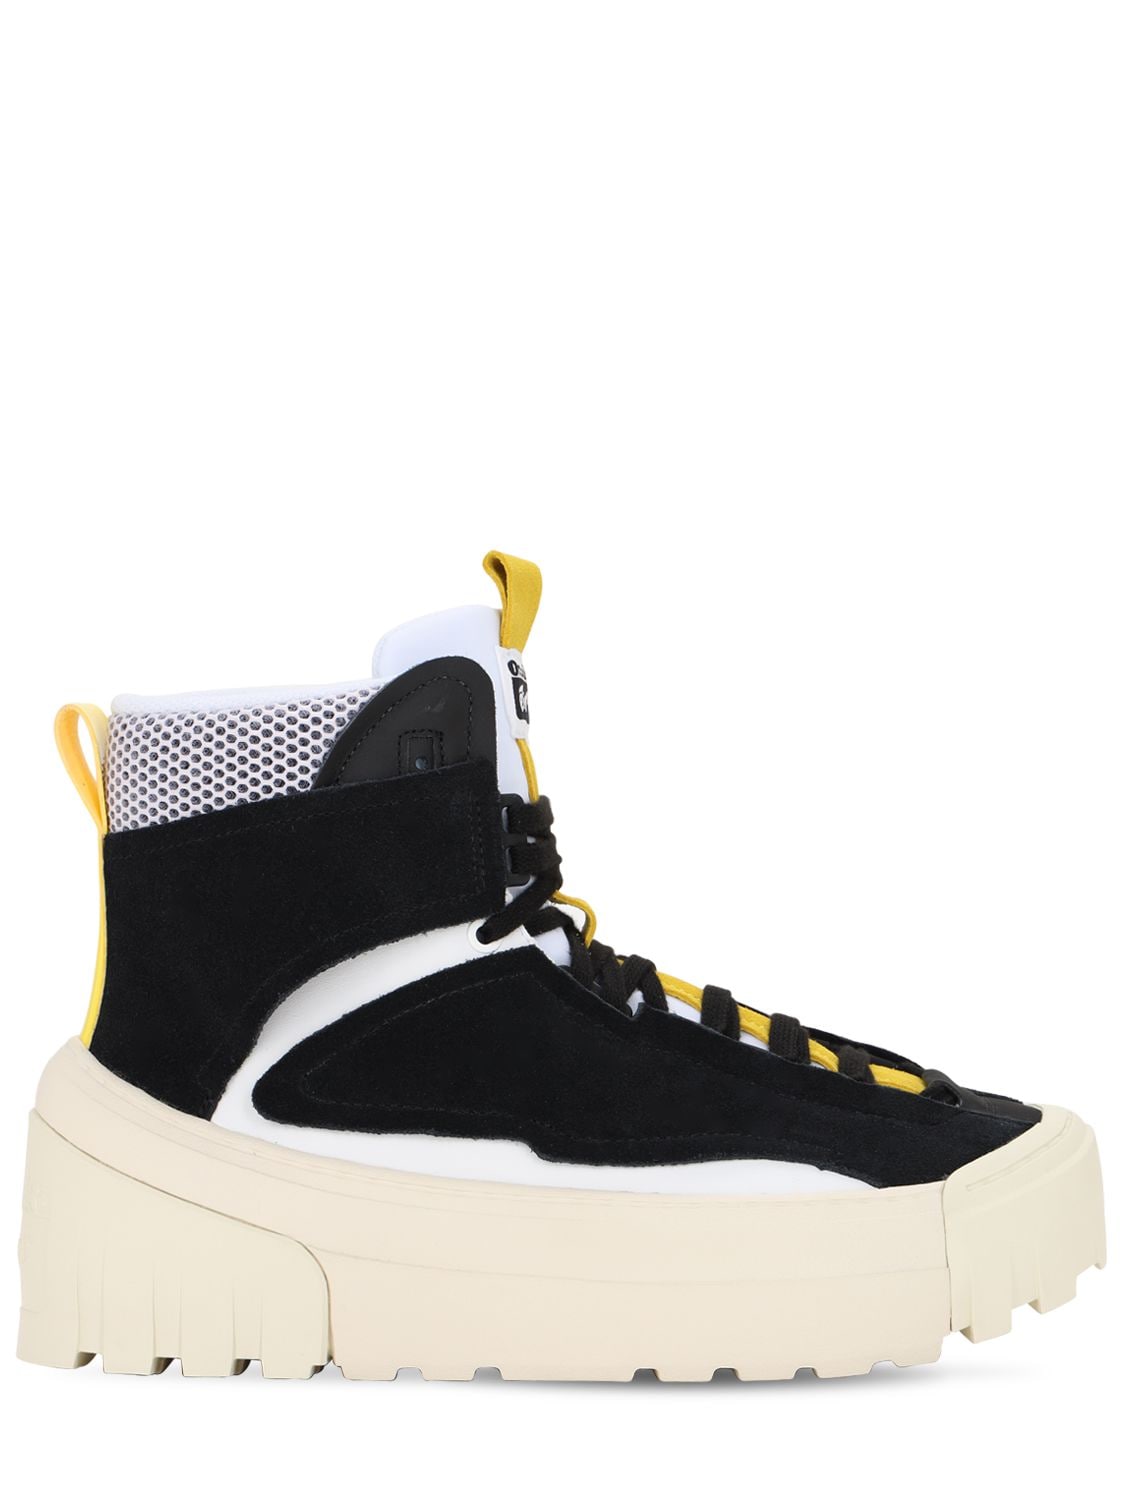 asics yellow sneakers